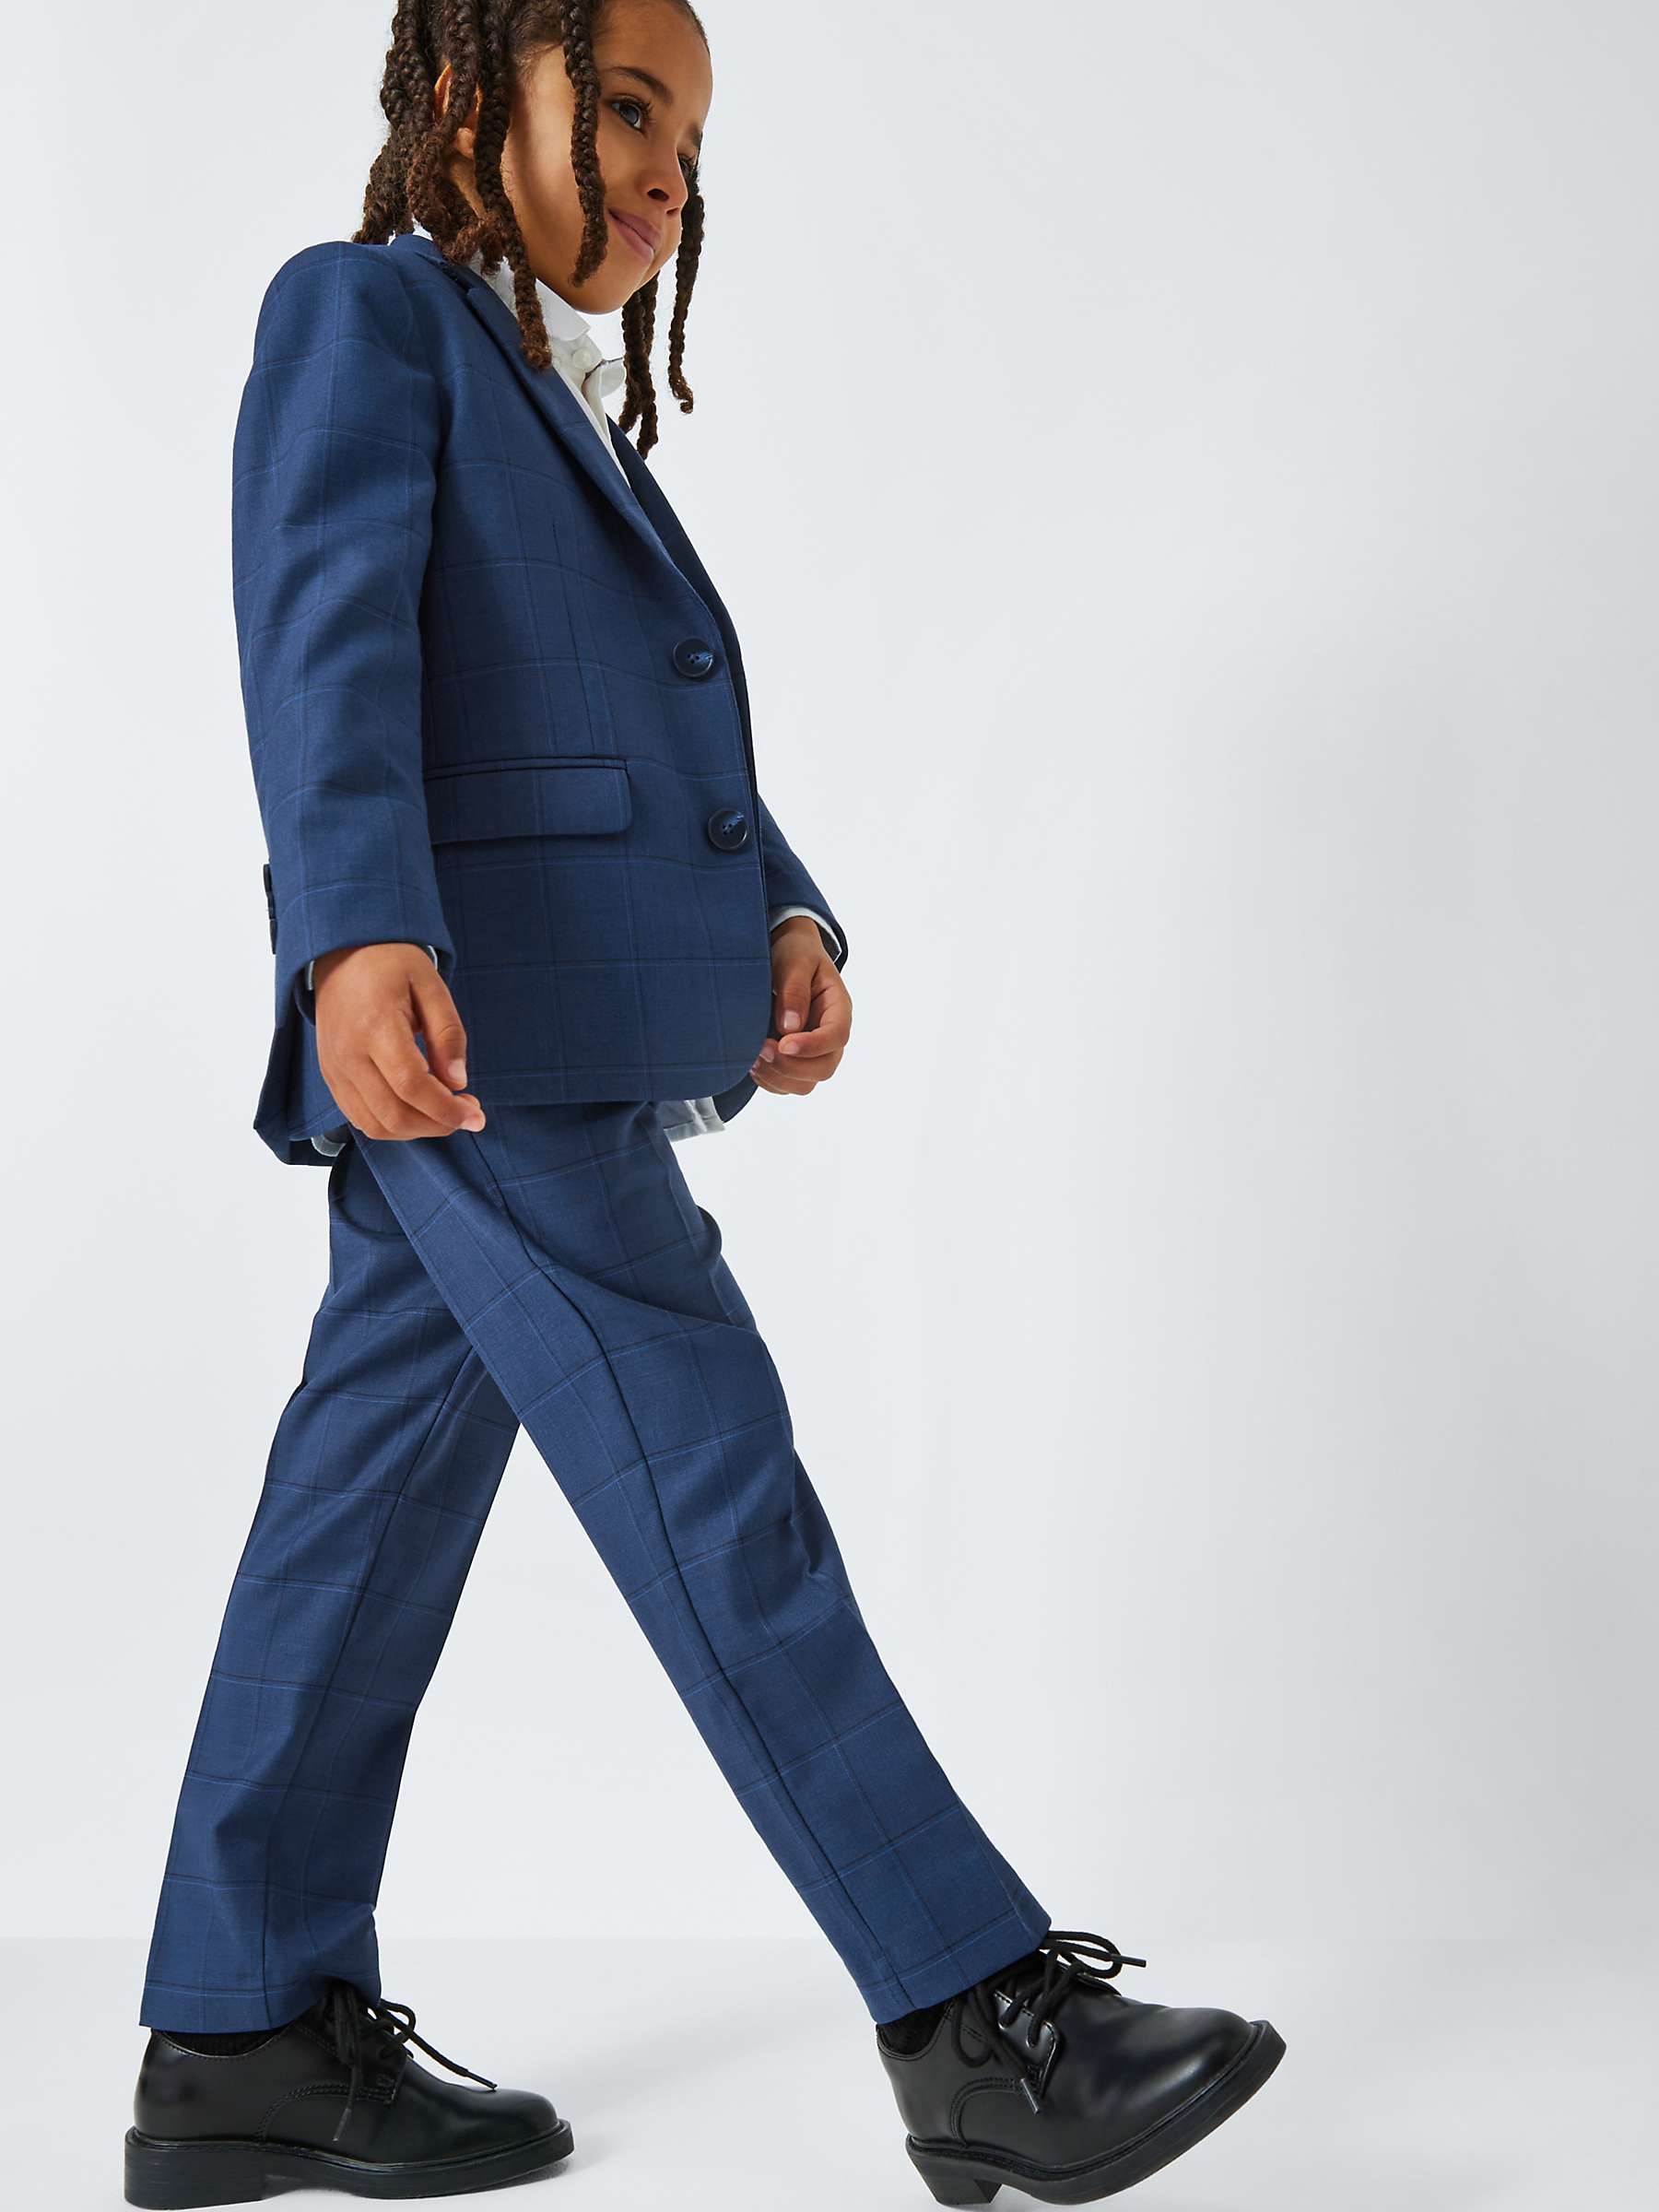 Buy John Lewis Heirloom Collection Kids' Check Suit Jacket, Navy Online at johnlewis.com